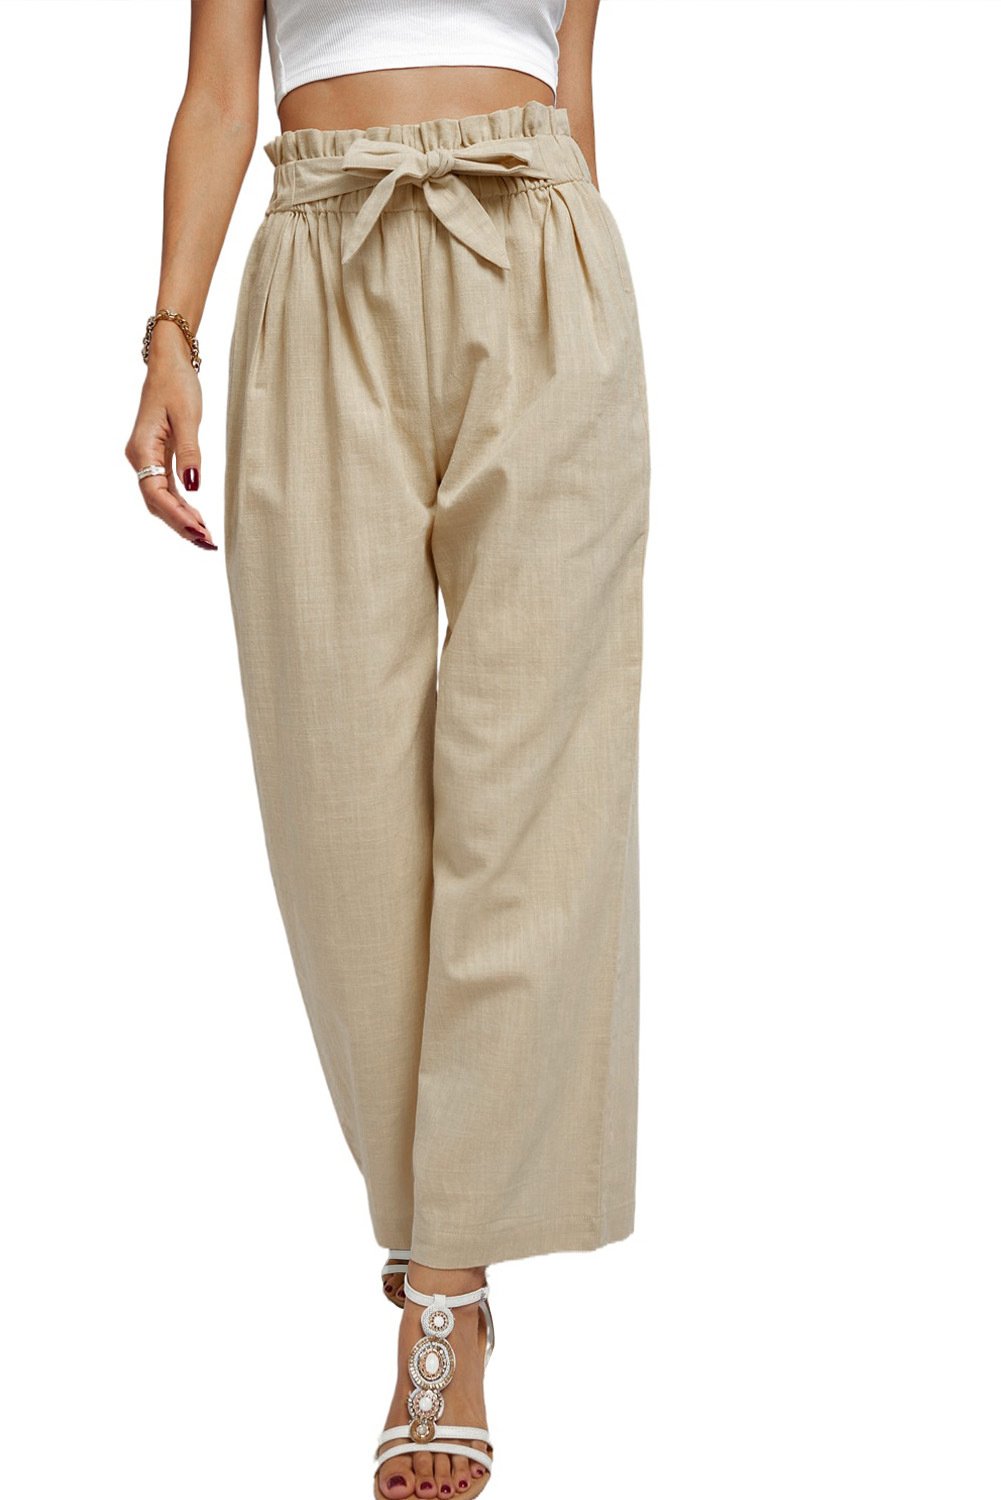 Casual Women Linen Long Pants-Women Bottoms-Khaki-S-Free Shipping Leatheretro